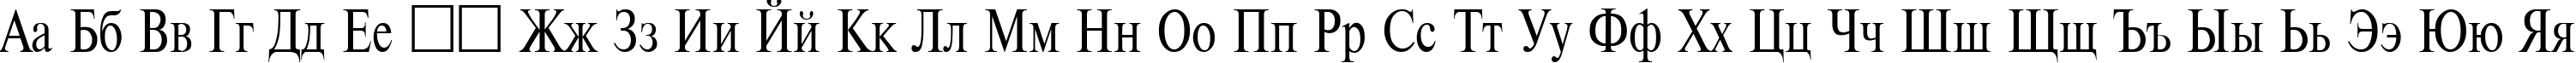 Пример написания русского алфавита шрифтом TimesET 85n